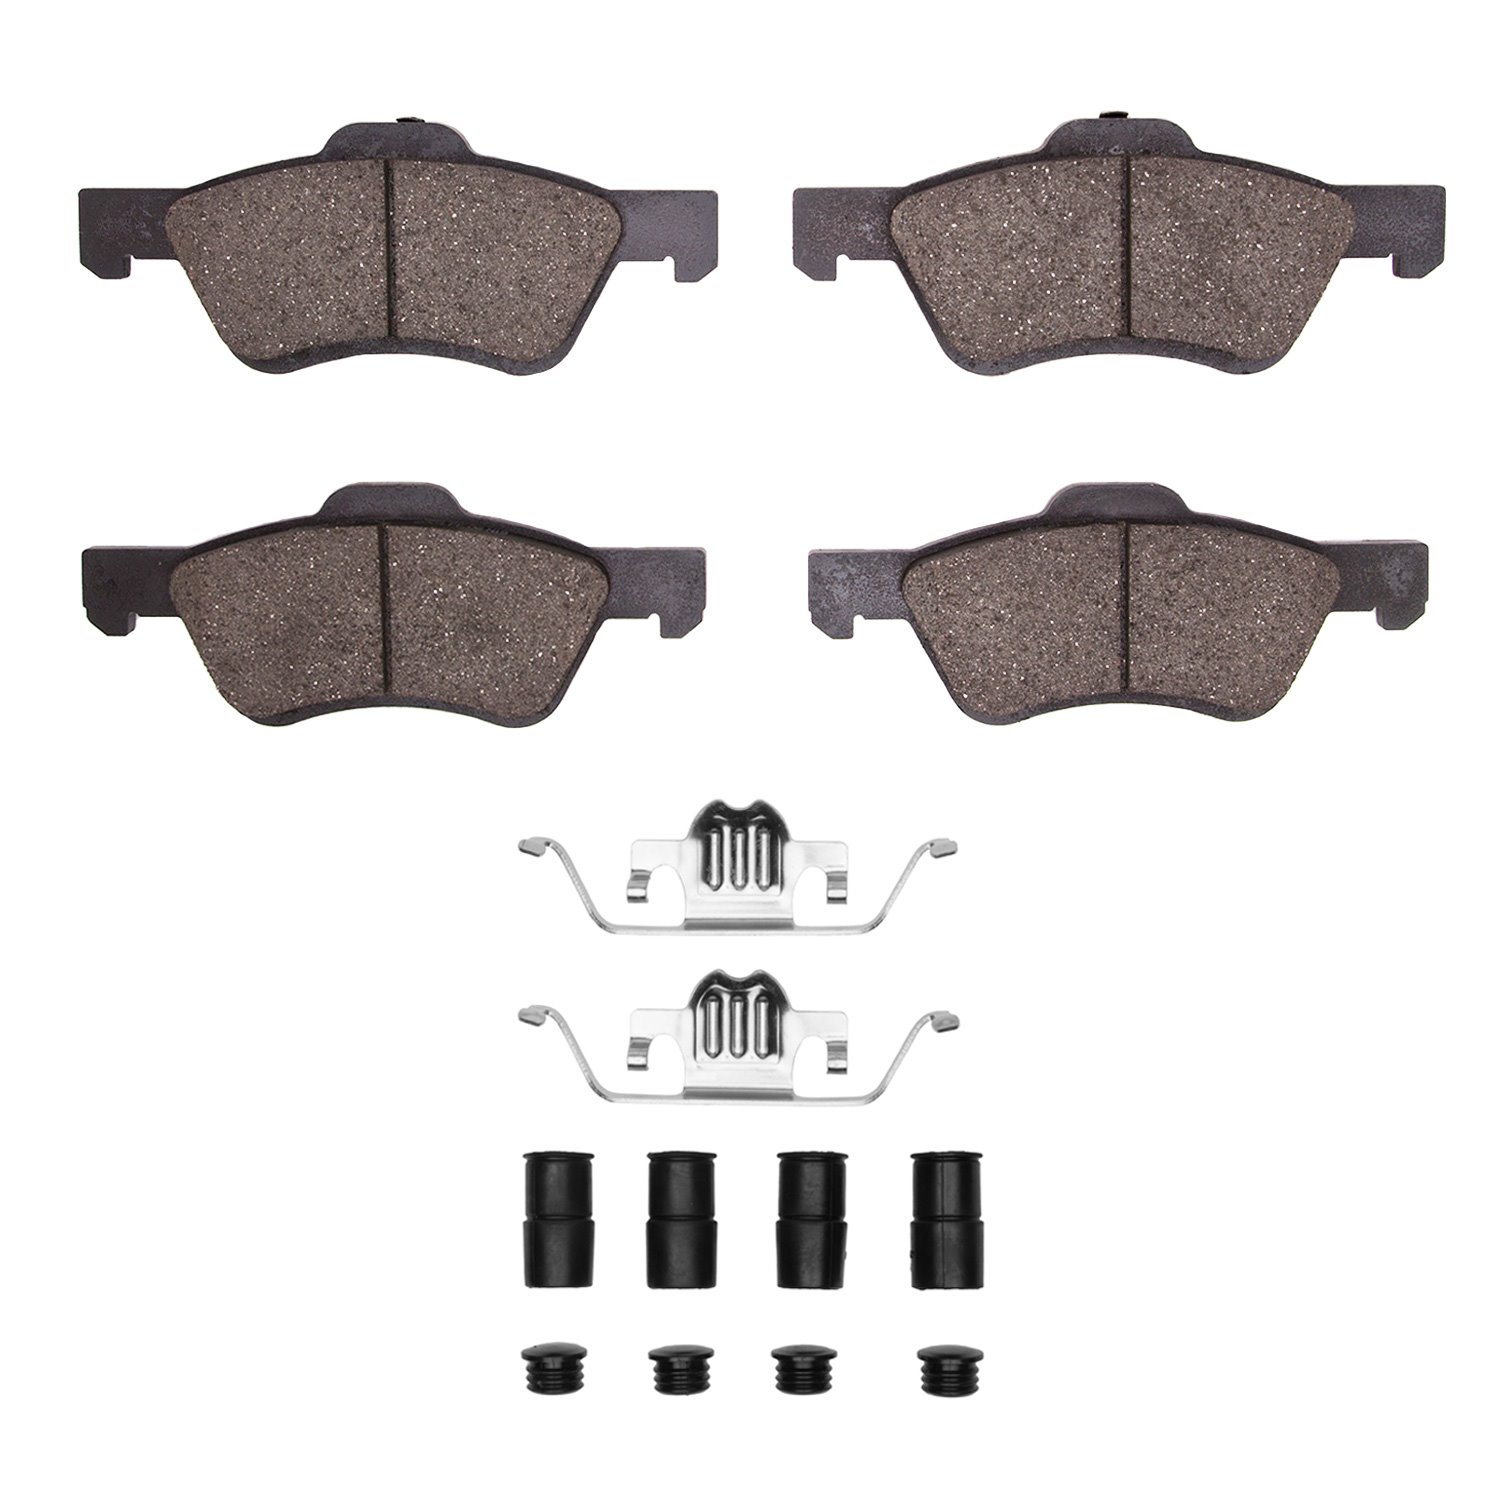 1551-1047-01 5000 Advanced Ceramic Brake Pads & Hardware Kit, 2005-2012 Ford/Lincoln/Mercury/Mazda, Position: Front